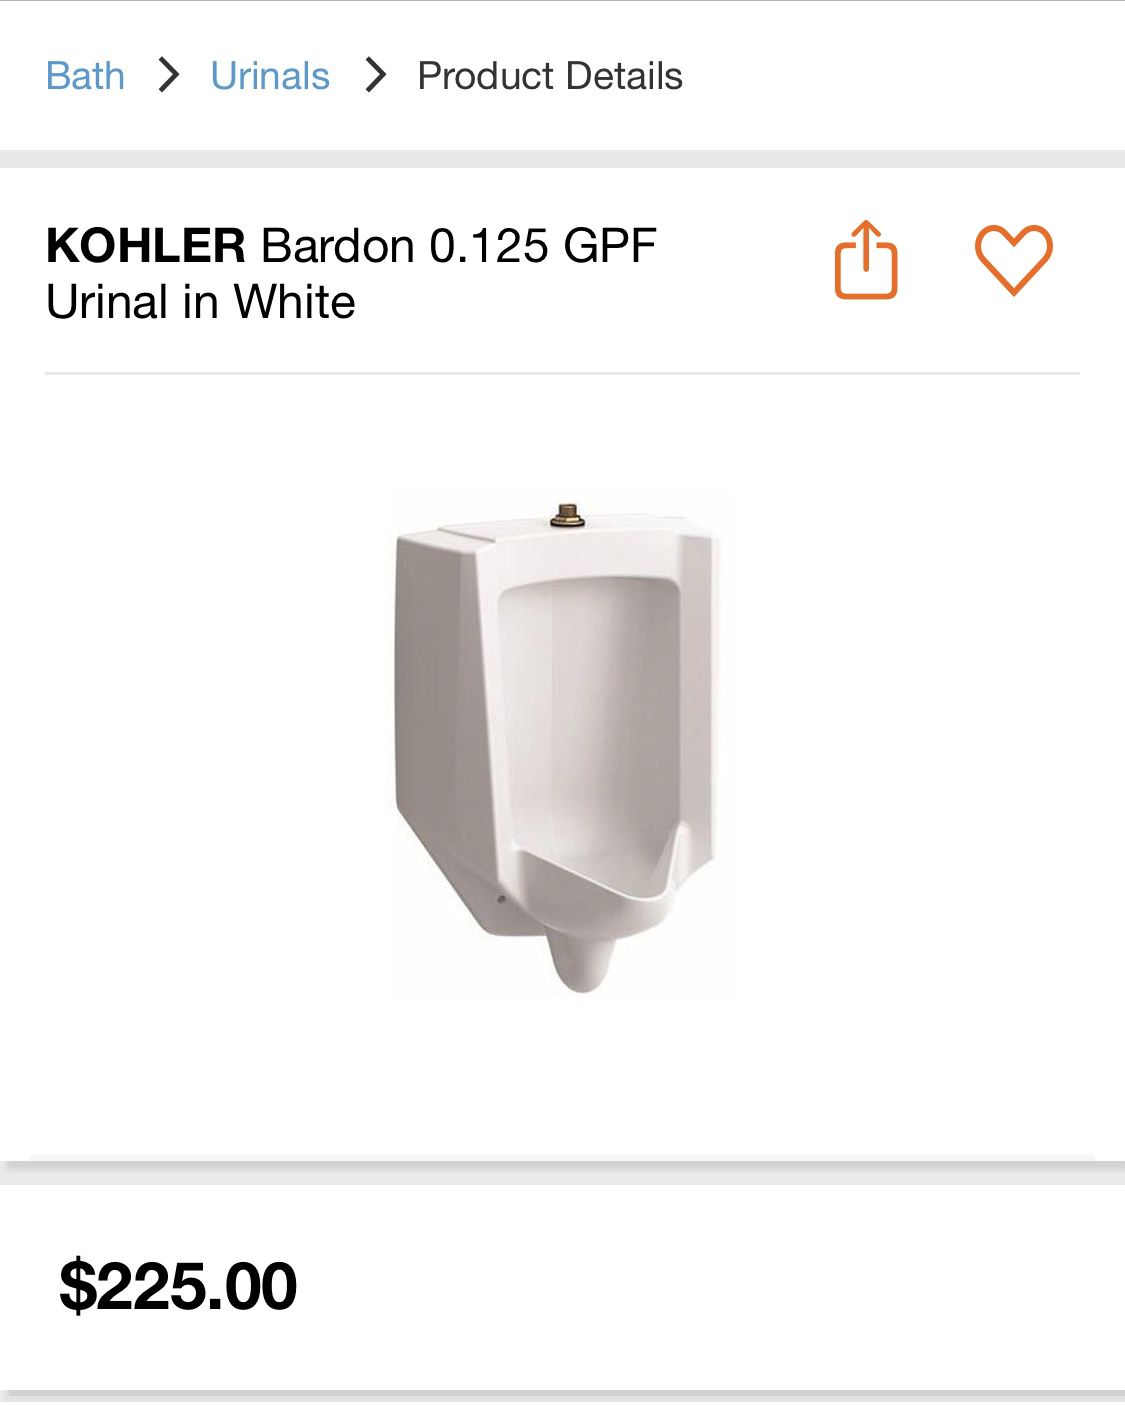 Kohler urinal